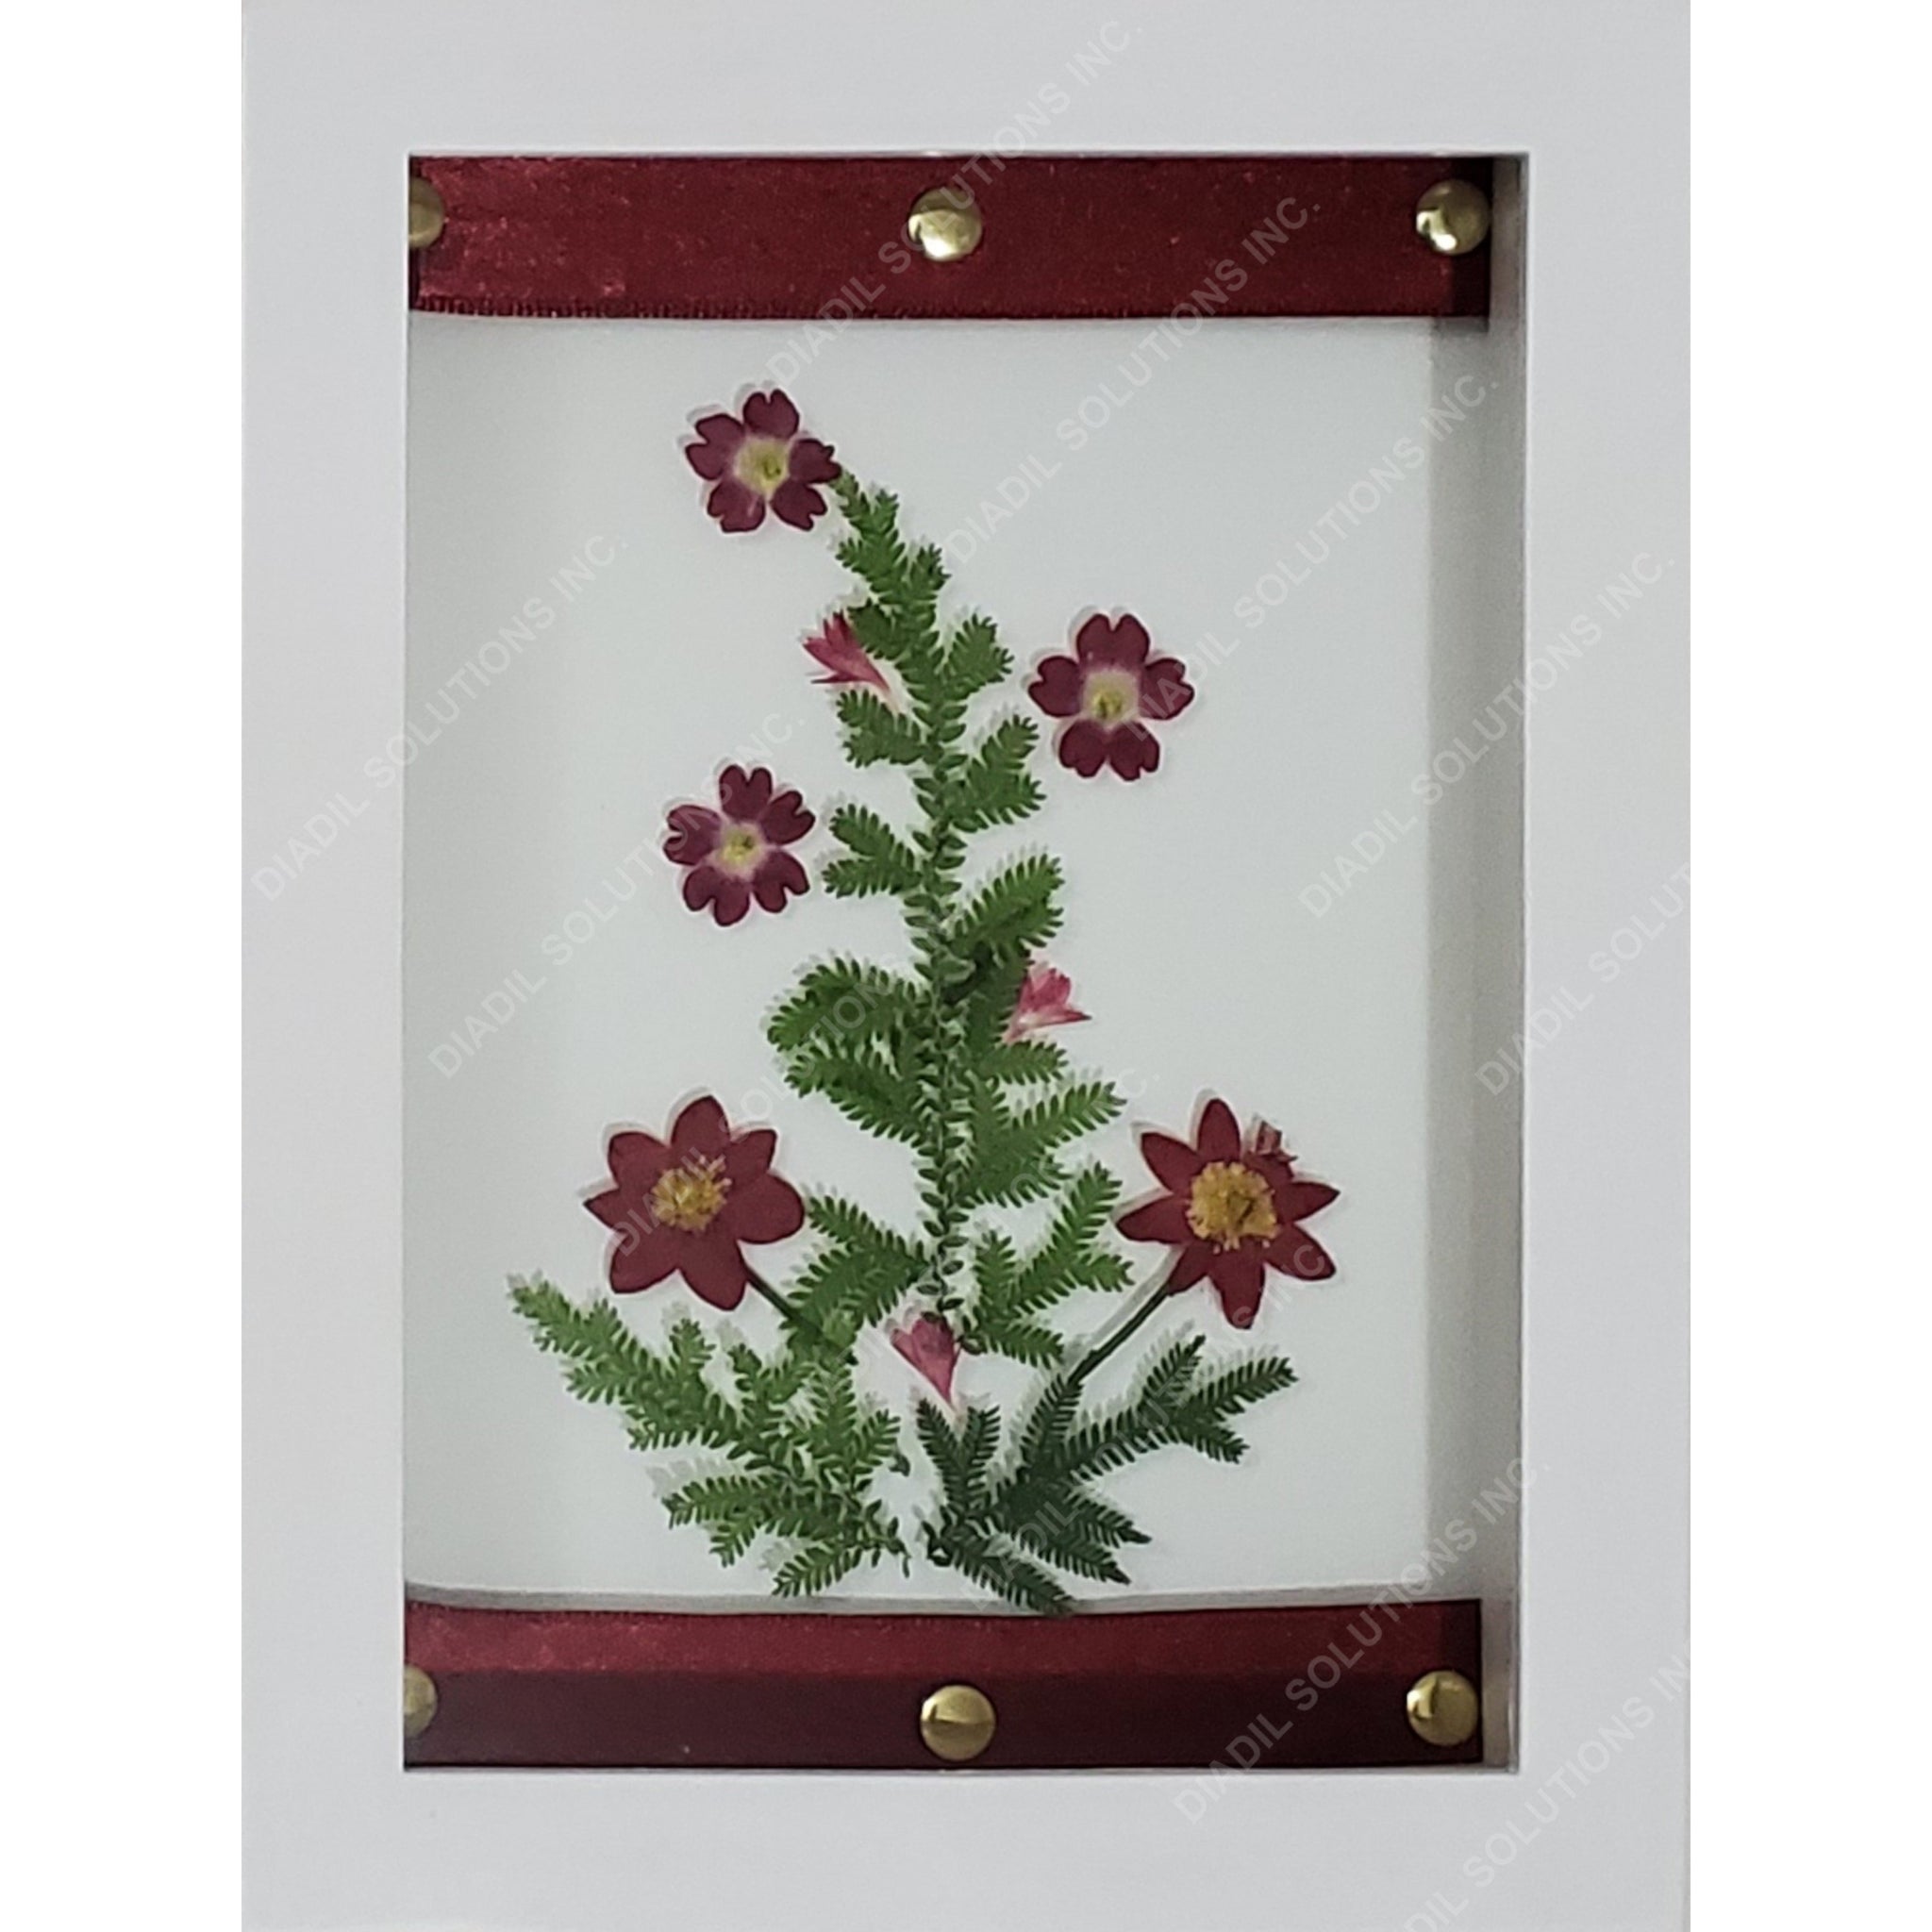 Fern and flower herbarium on frame, Botanical art, Wall decor, Pressed flower art, Dried plant art framed